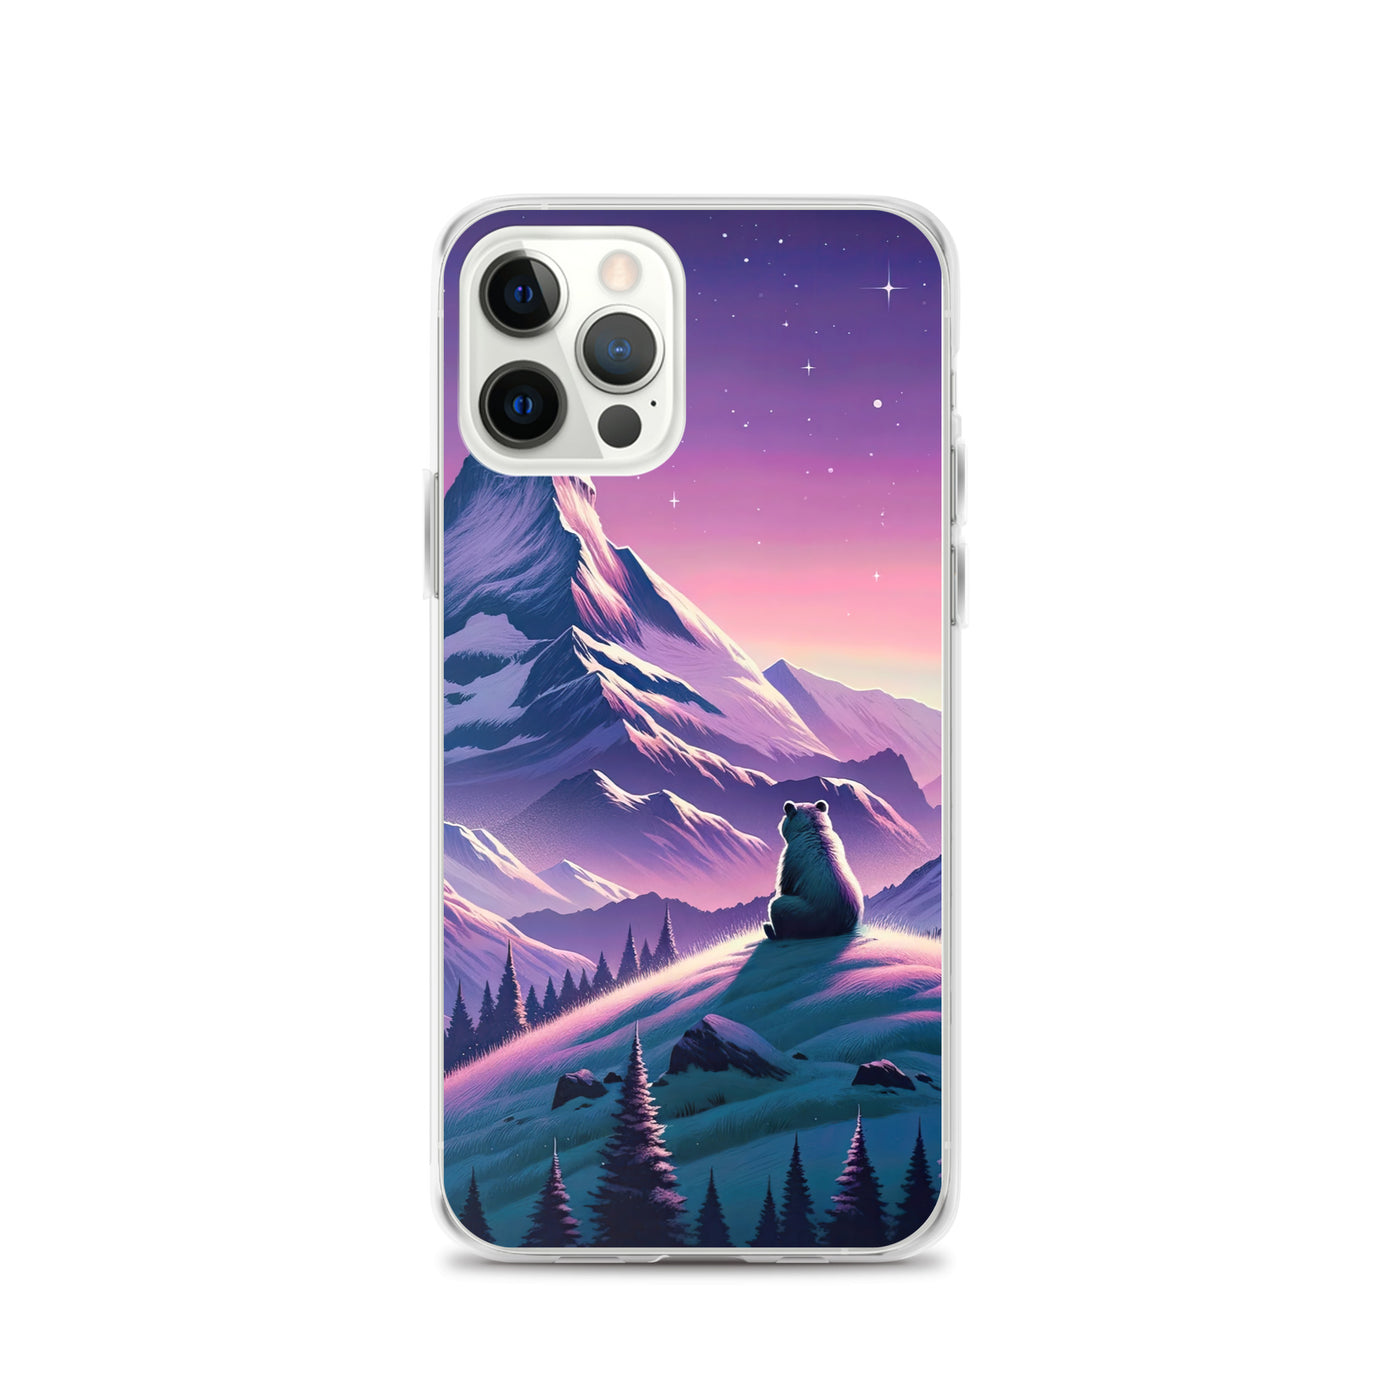 Bezaubernder Alpenabend mit Bär, lavendel-rosafarbener Himmel (AN) - iPhone Schutzhülle (durchsichtig) xxx yyy zzz iPhone 12 Pro